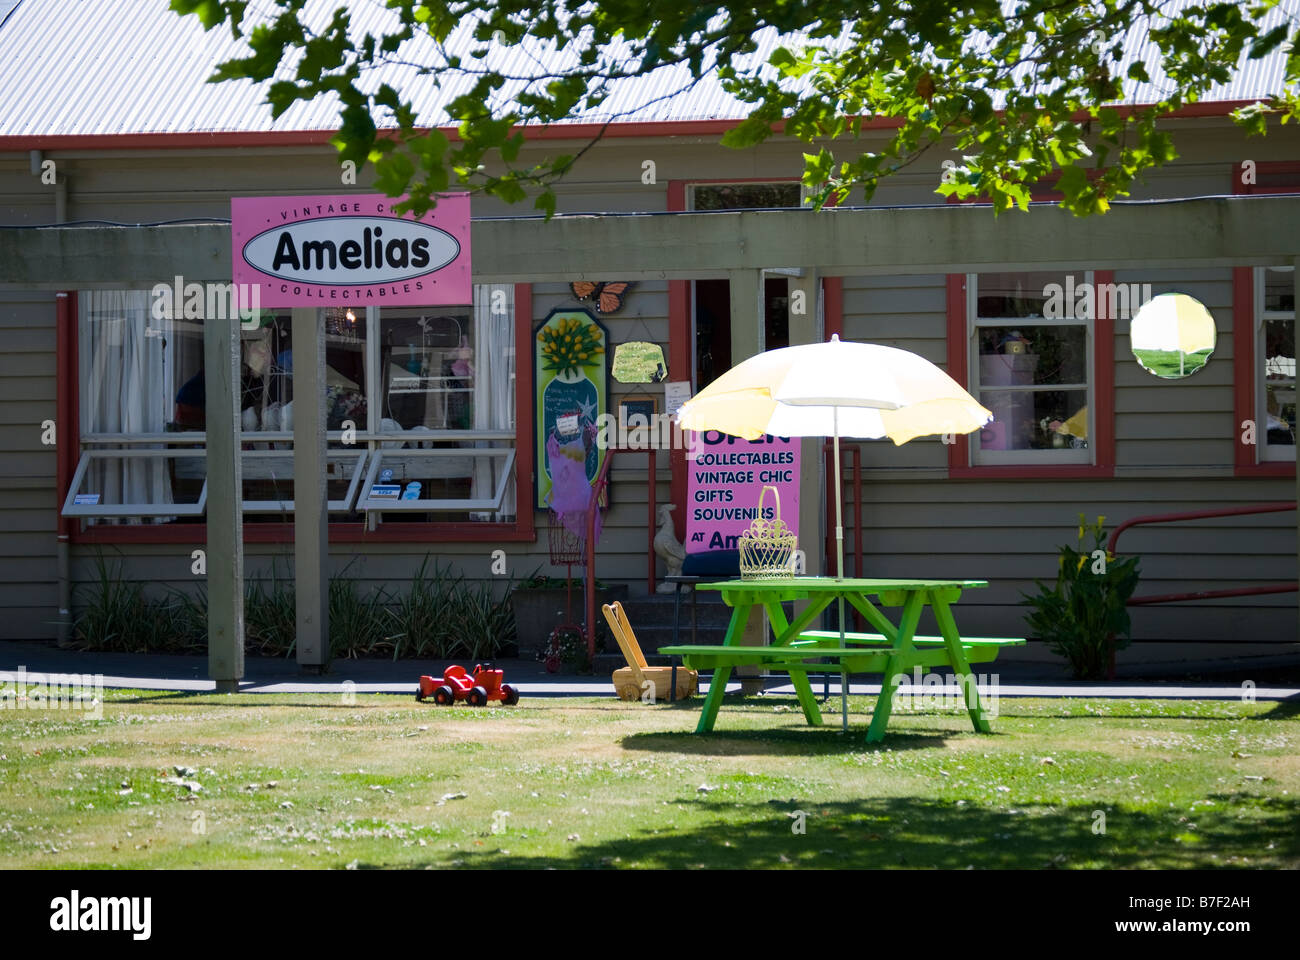 Amelias Collectables, Ashford villaggio artigianale, West Street, Ashburton, Canterbury, Nuova Zelanda Foto Stock